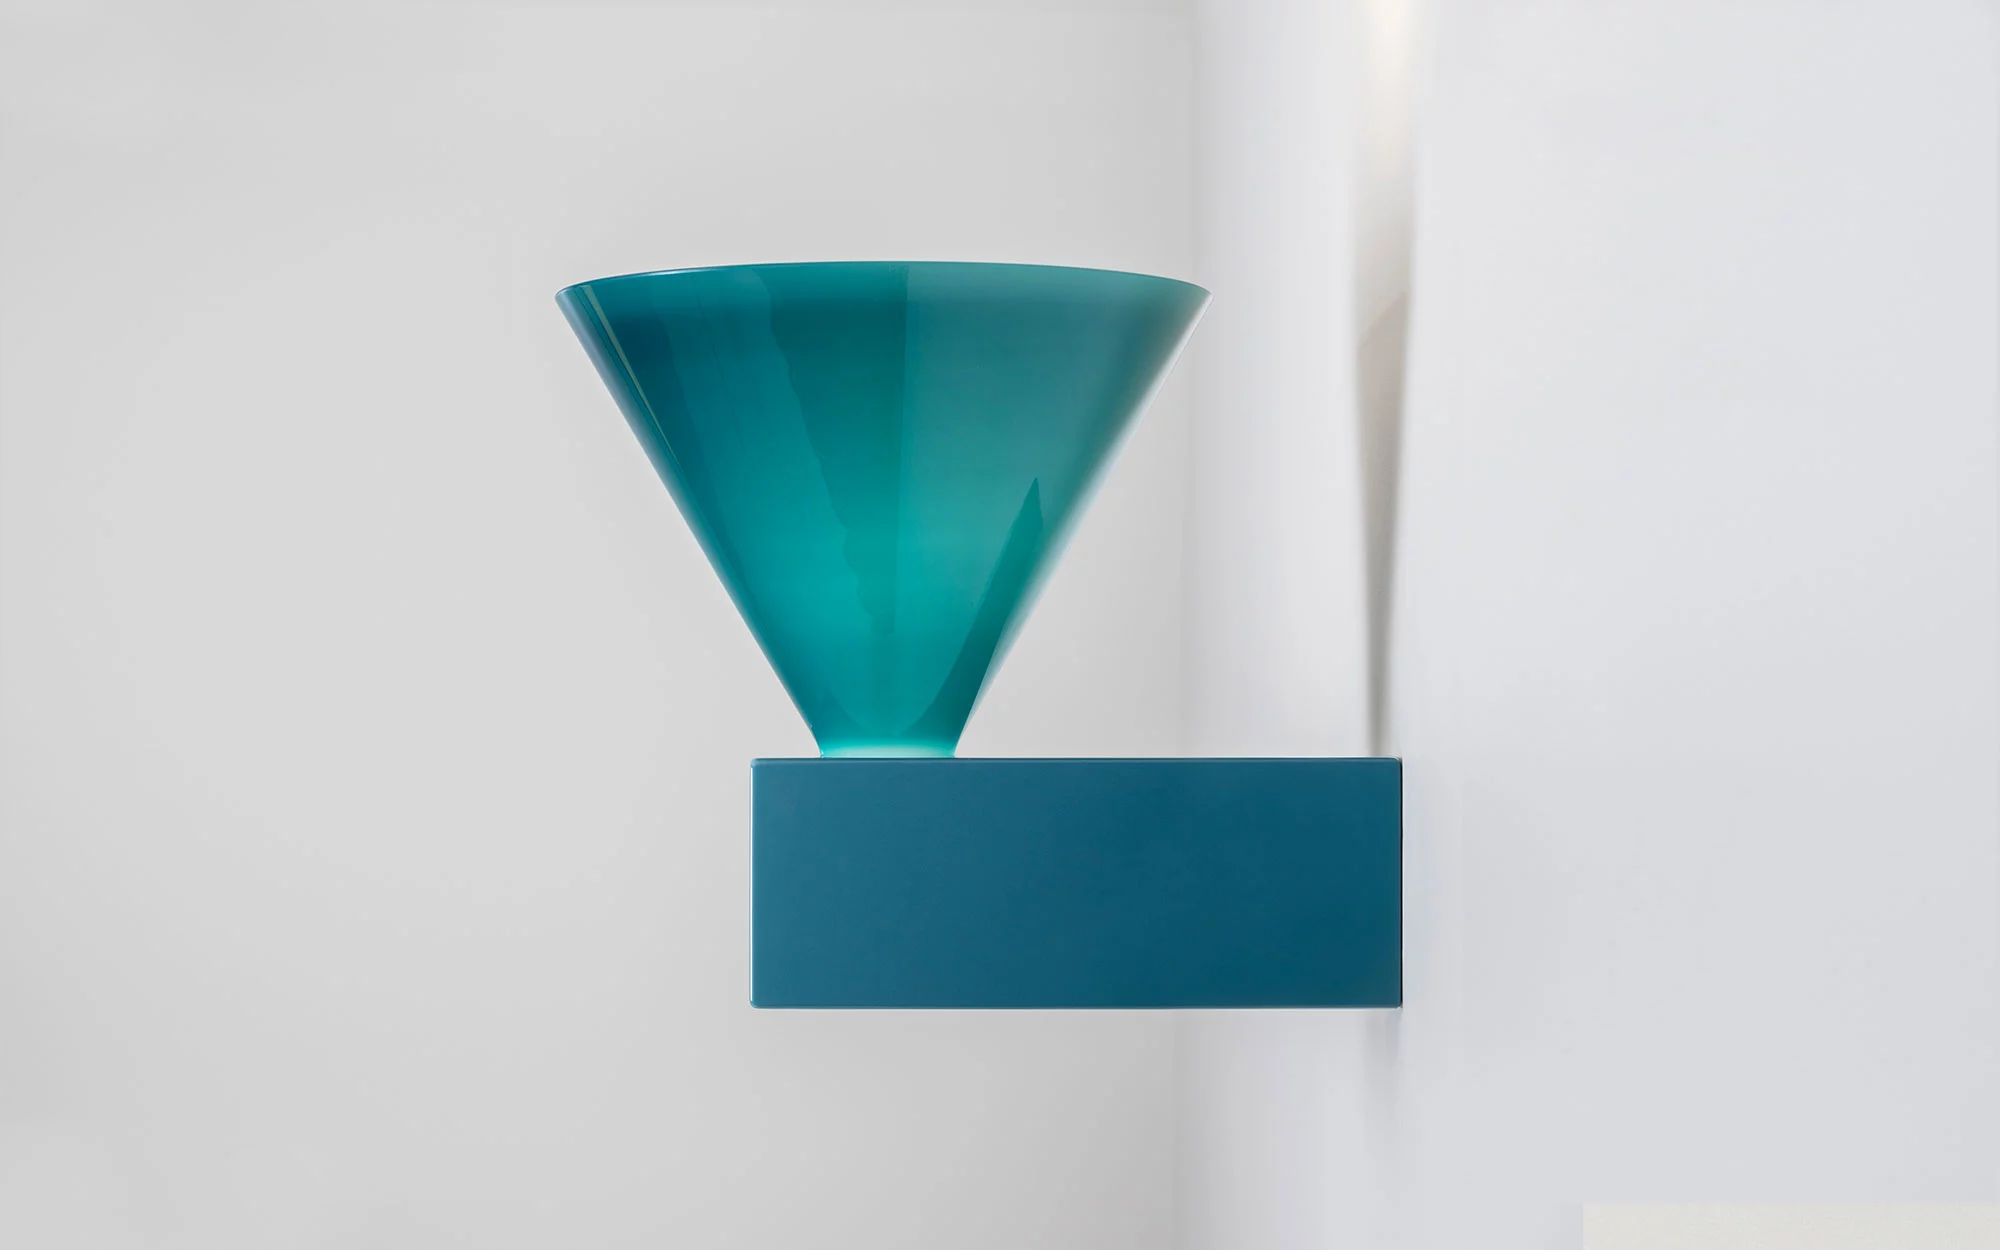 Signal W MONOCHROMATIC - Edward Barber and Jay Osgerby - Pendant light - Galerie kreo